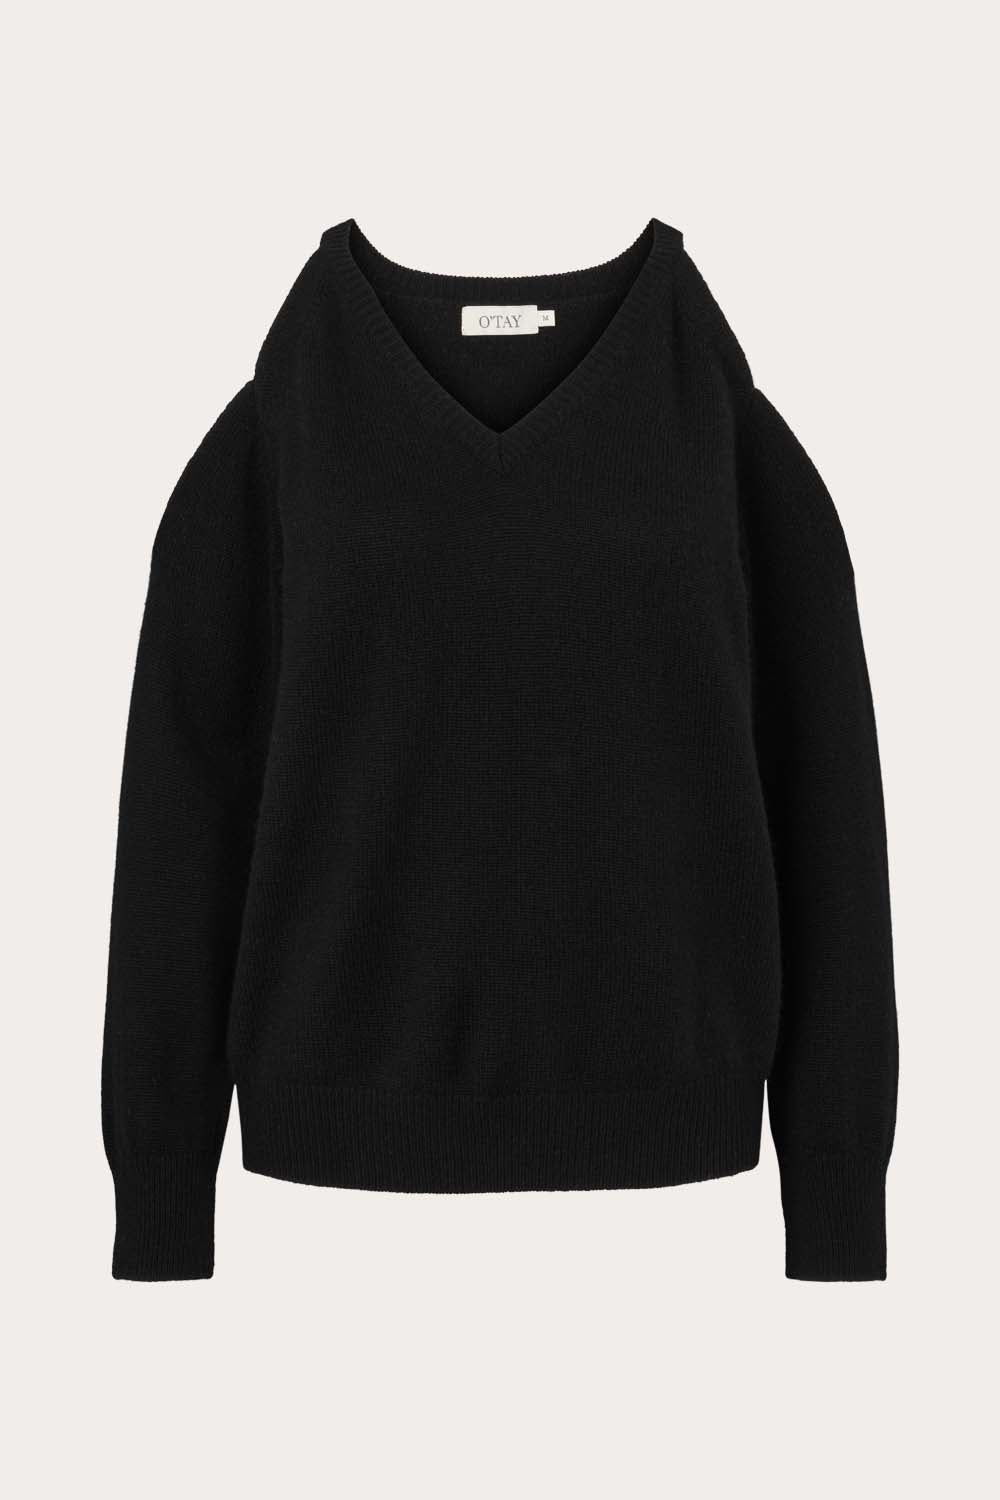 O'TAY Davina Sweater Blouses Black